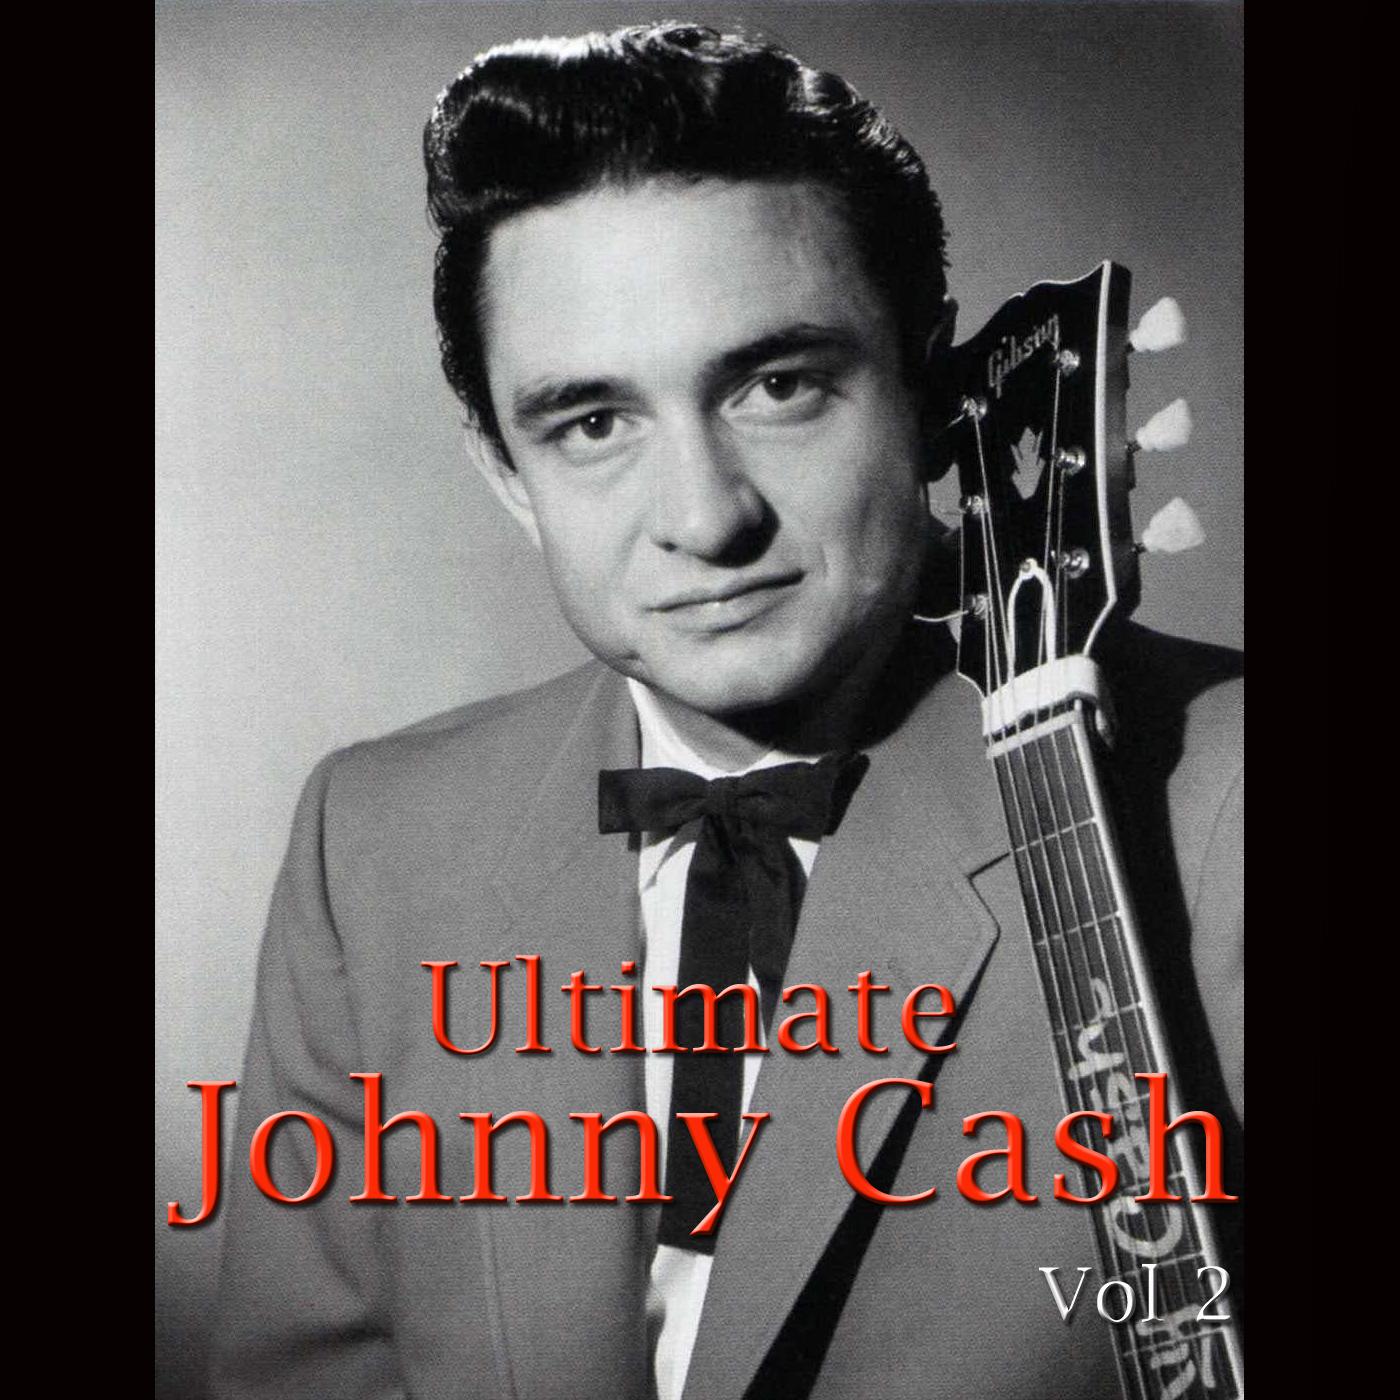 Ultimate Johnny Cash Vol 2